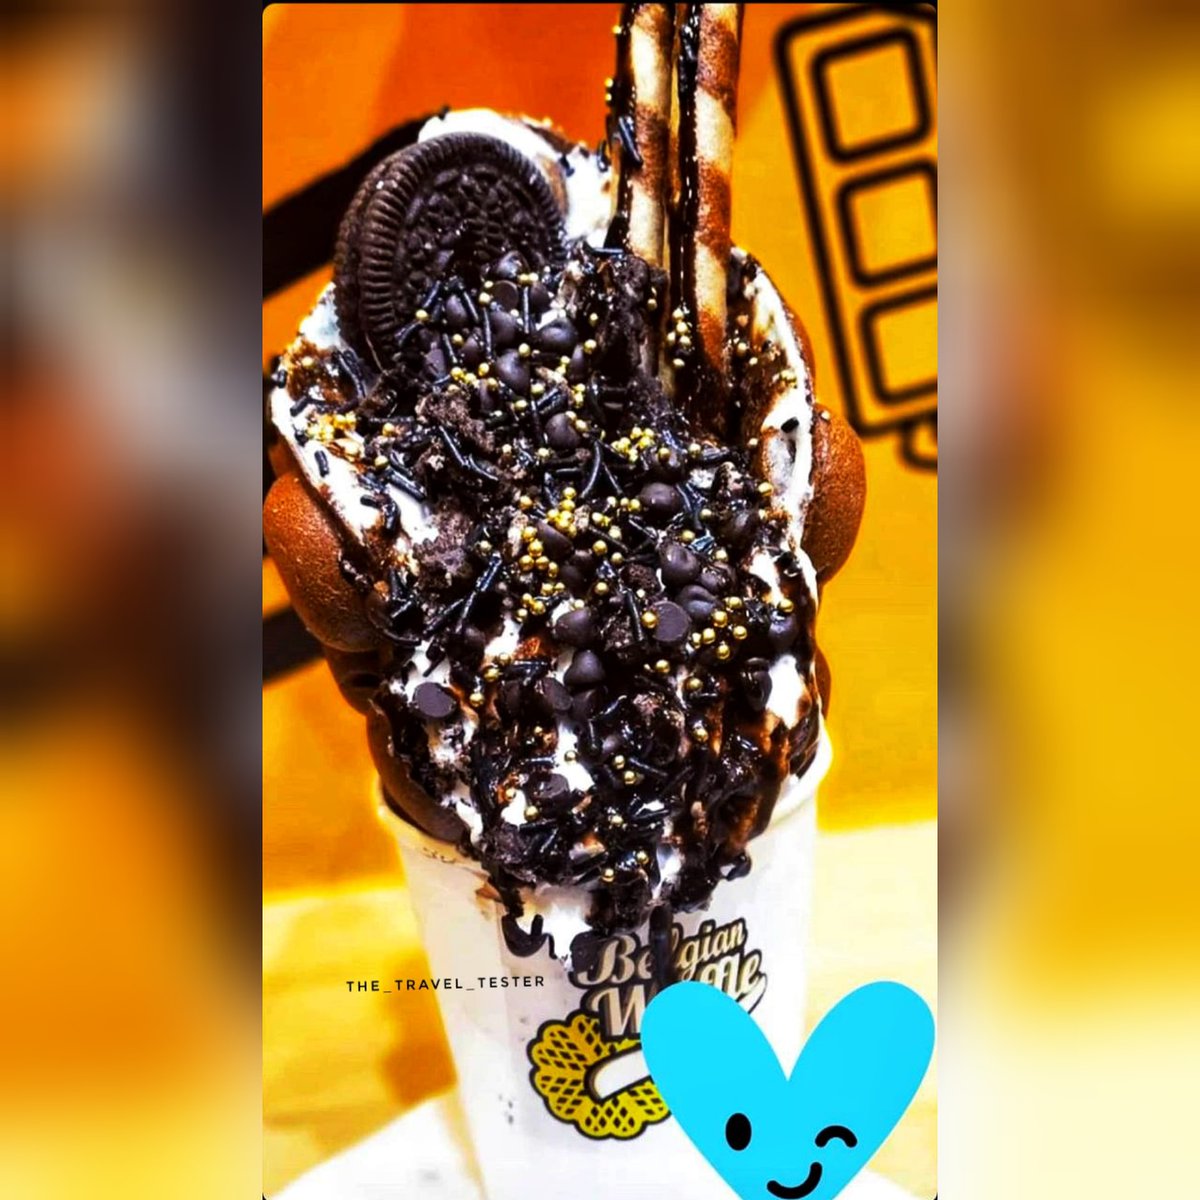 Drooooliciouss Waffle ever 🤩
Tag someone who can finish it all alone 🙈
°
#waffles #wafflelove #unbelievable #chocolatelover #foodofkolkata #eatthis #thegreatindianfoodie #delhifoodie #kolkatafoodie #ibb #thecrazyindianfoodie #foodiesofindia #munchymumbai #choco #oreo #drooling